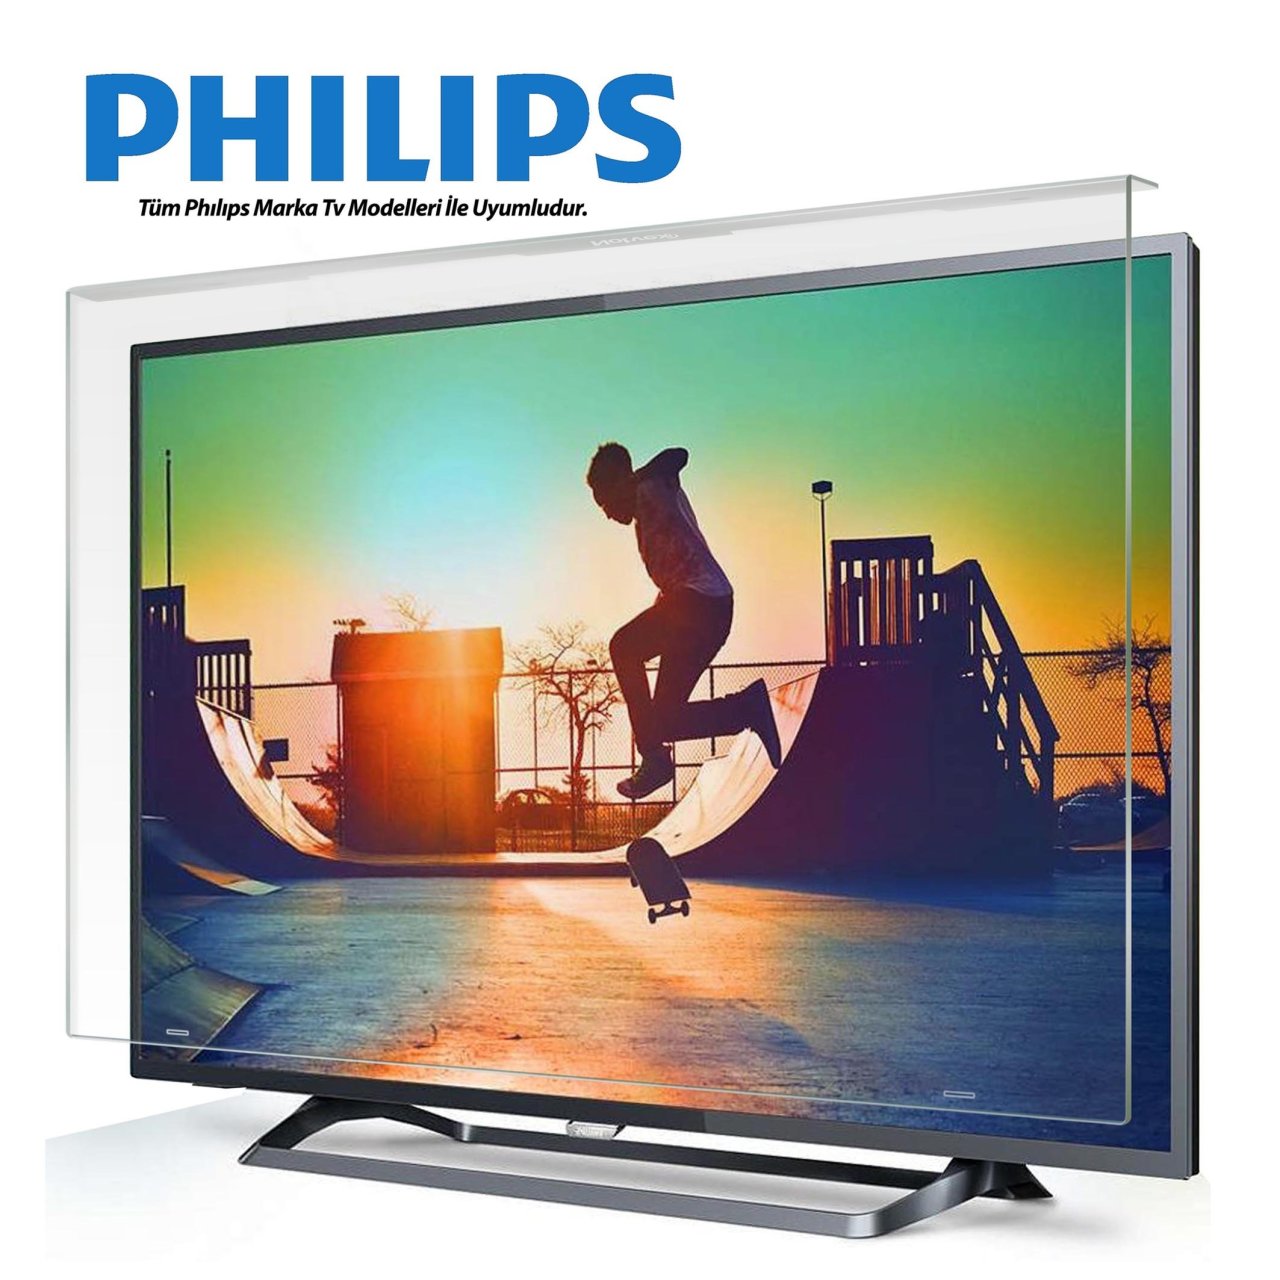 Philips 60PFL8708S Elevation Uyumlu TV Ekran Koruyucu